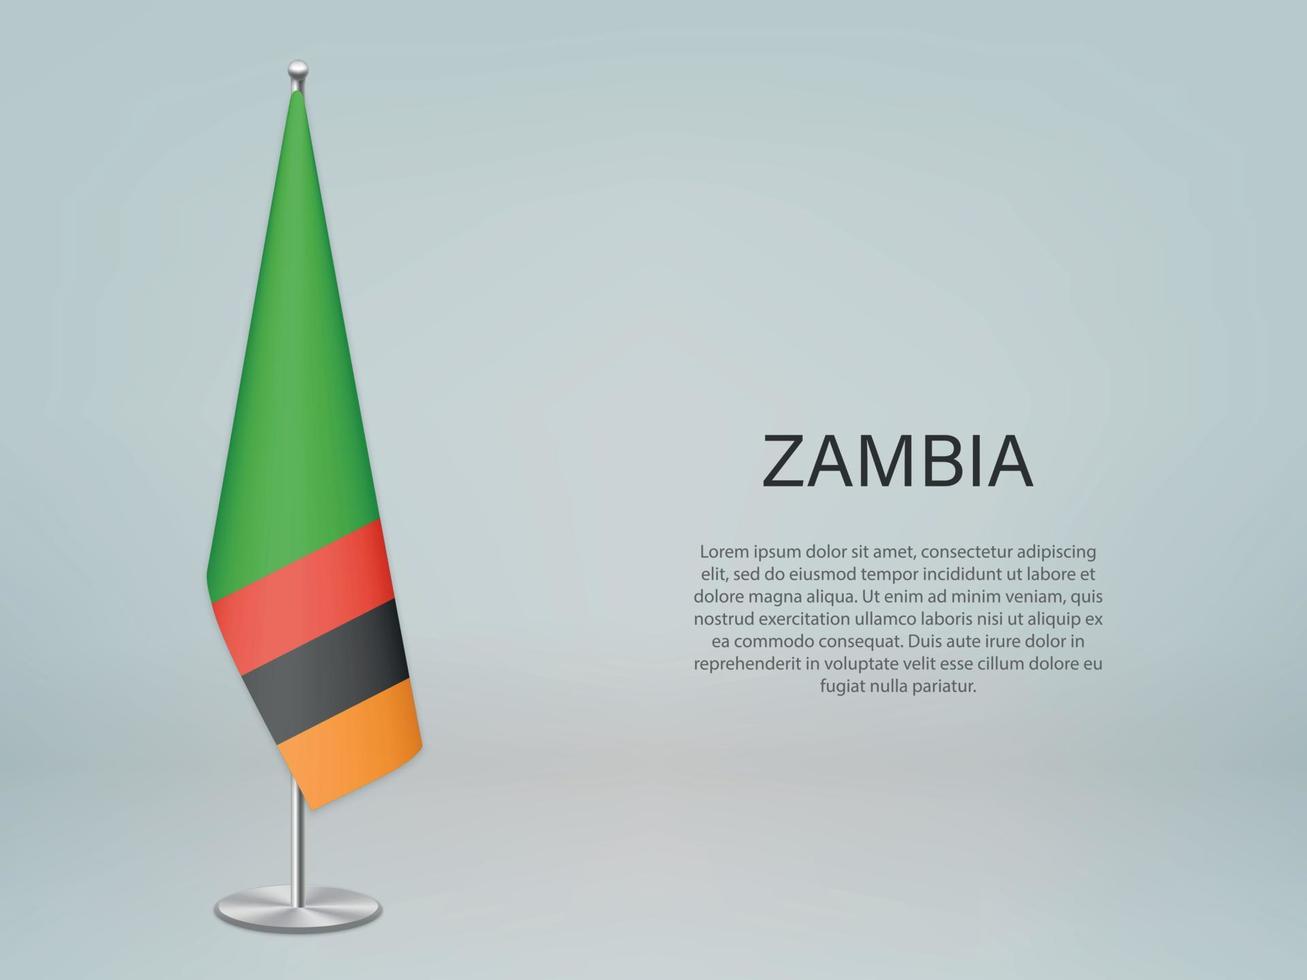 Zâmbia pendurada bandeira no stand. modelo de banner de conferência vetor